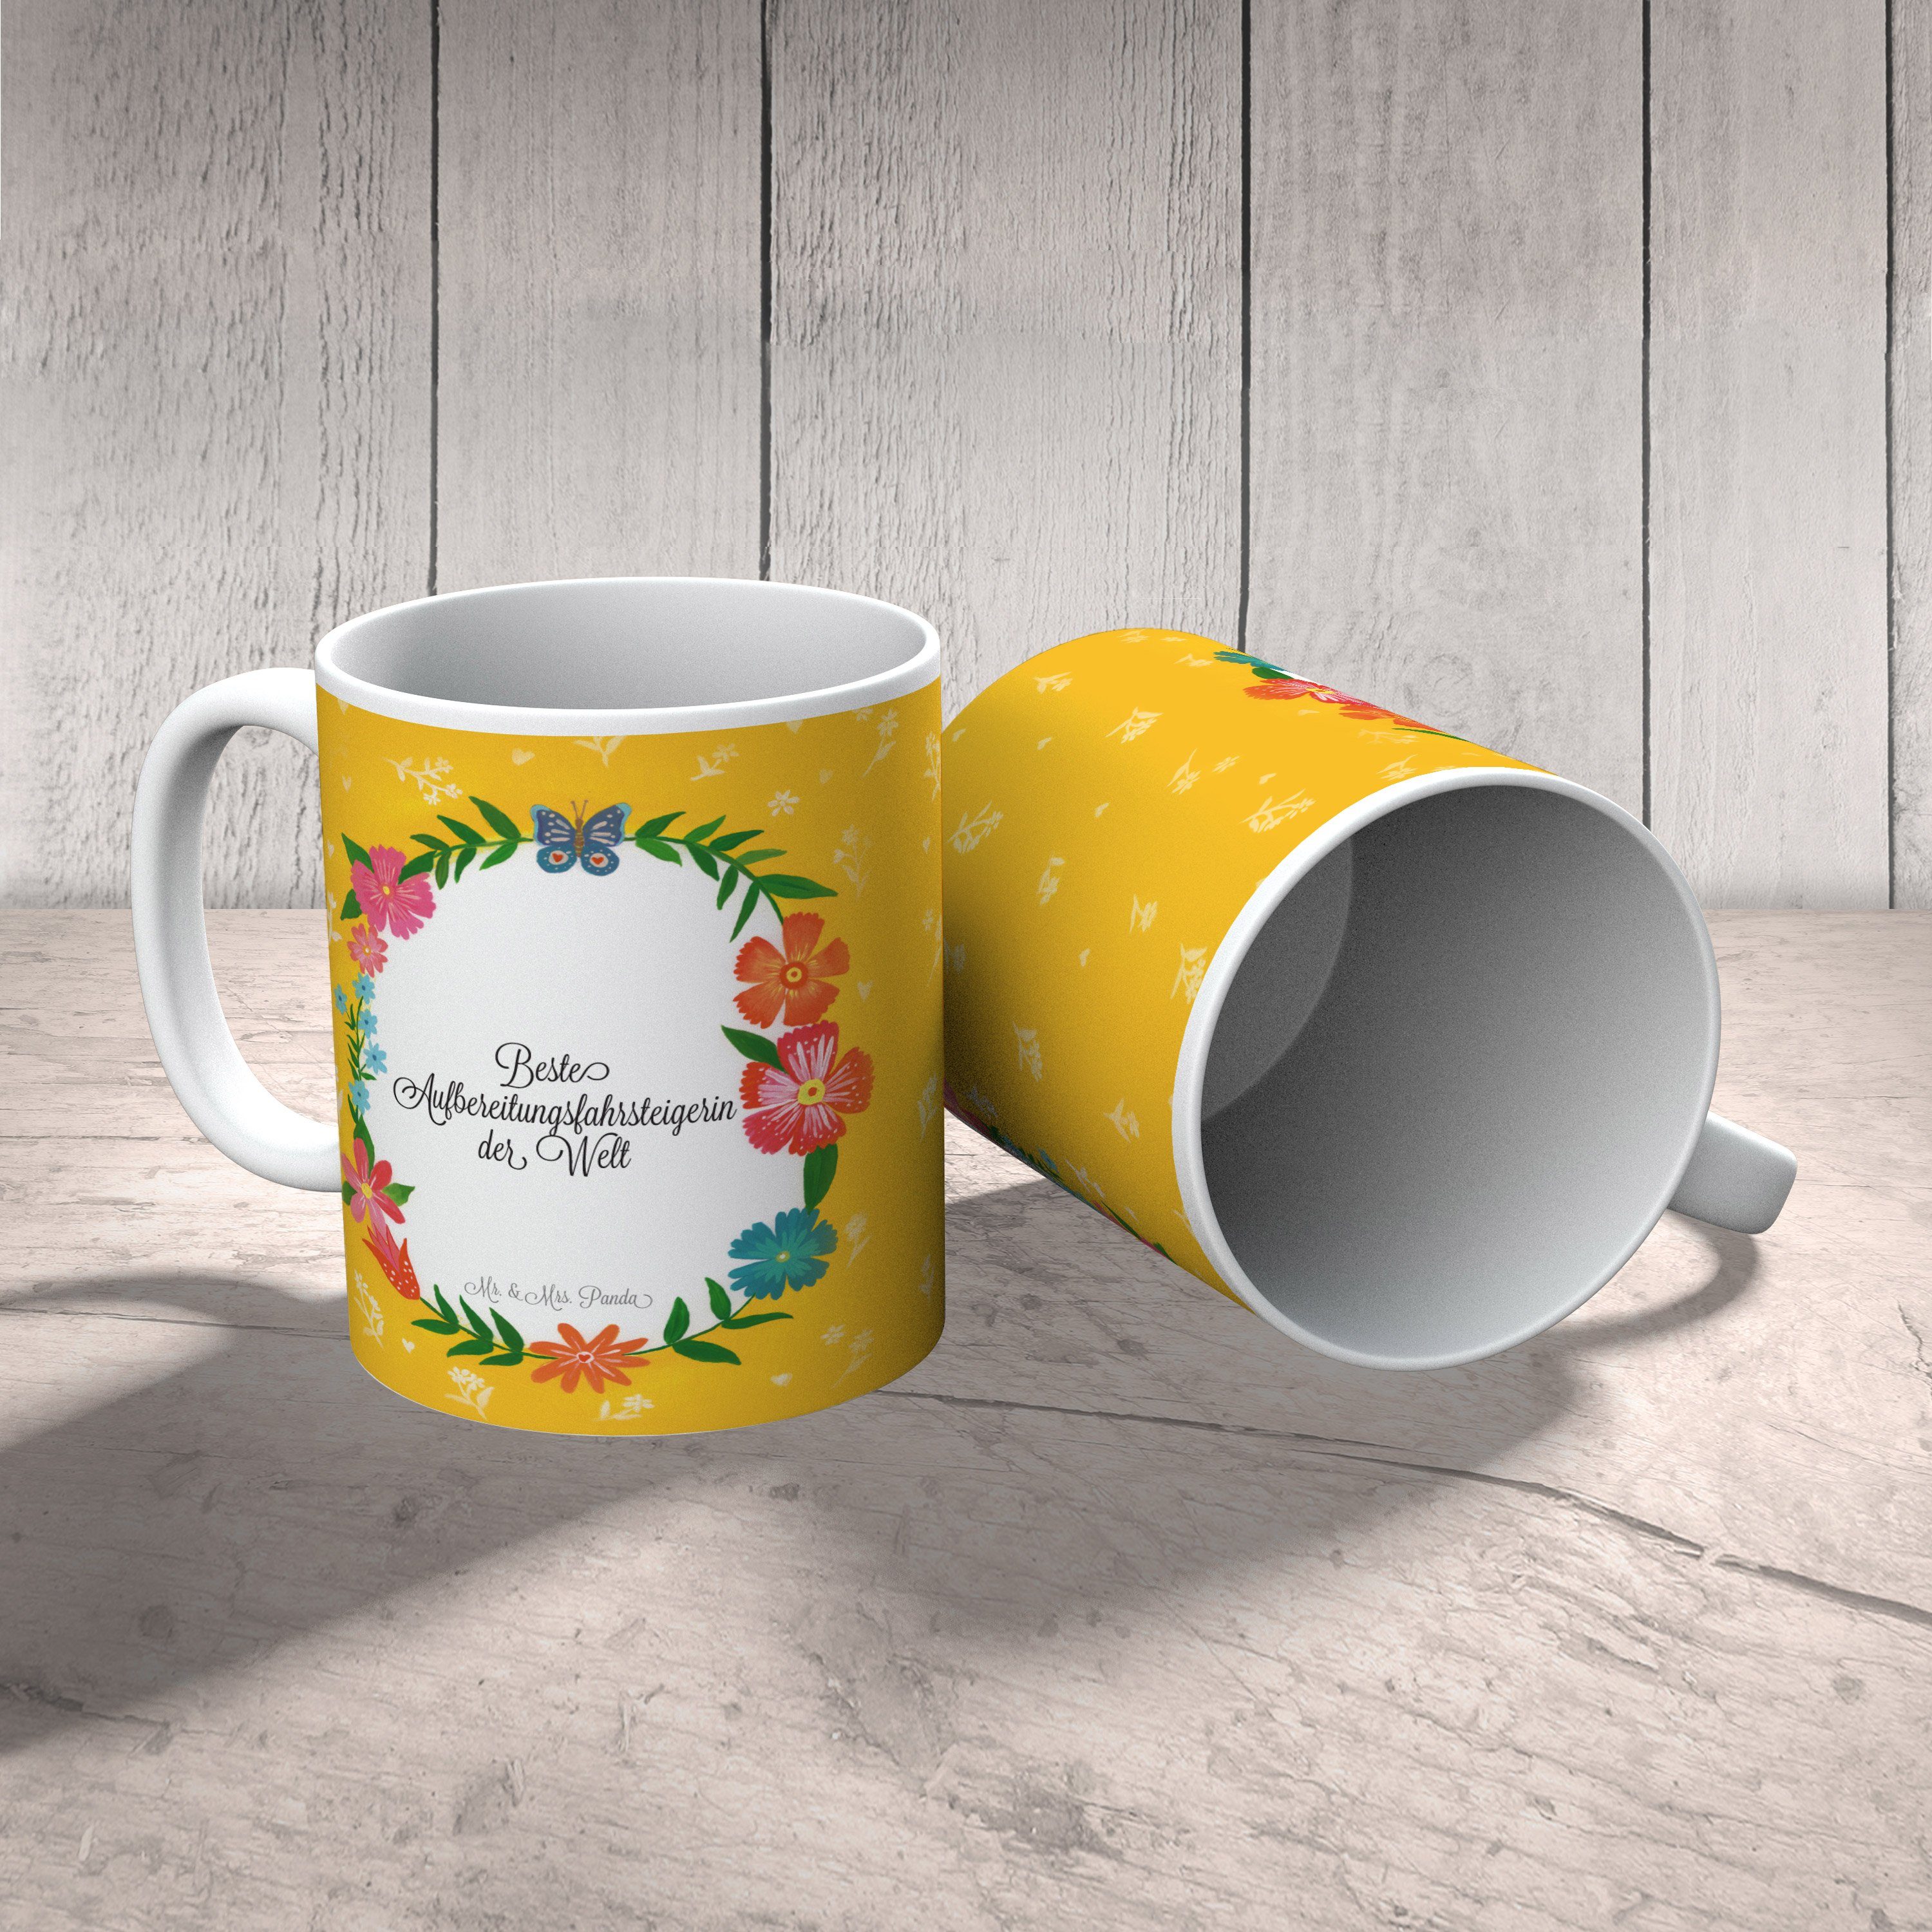 Mr. & Mrs. Panda Tasse Kaffeebech, Aufbereitungsfahrsteigerin Keramik Schenken, Geschenk, Abschied, 